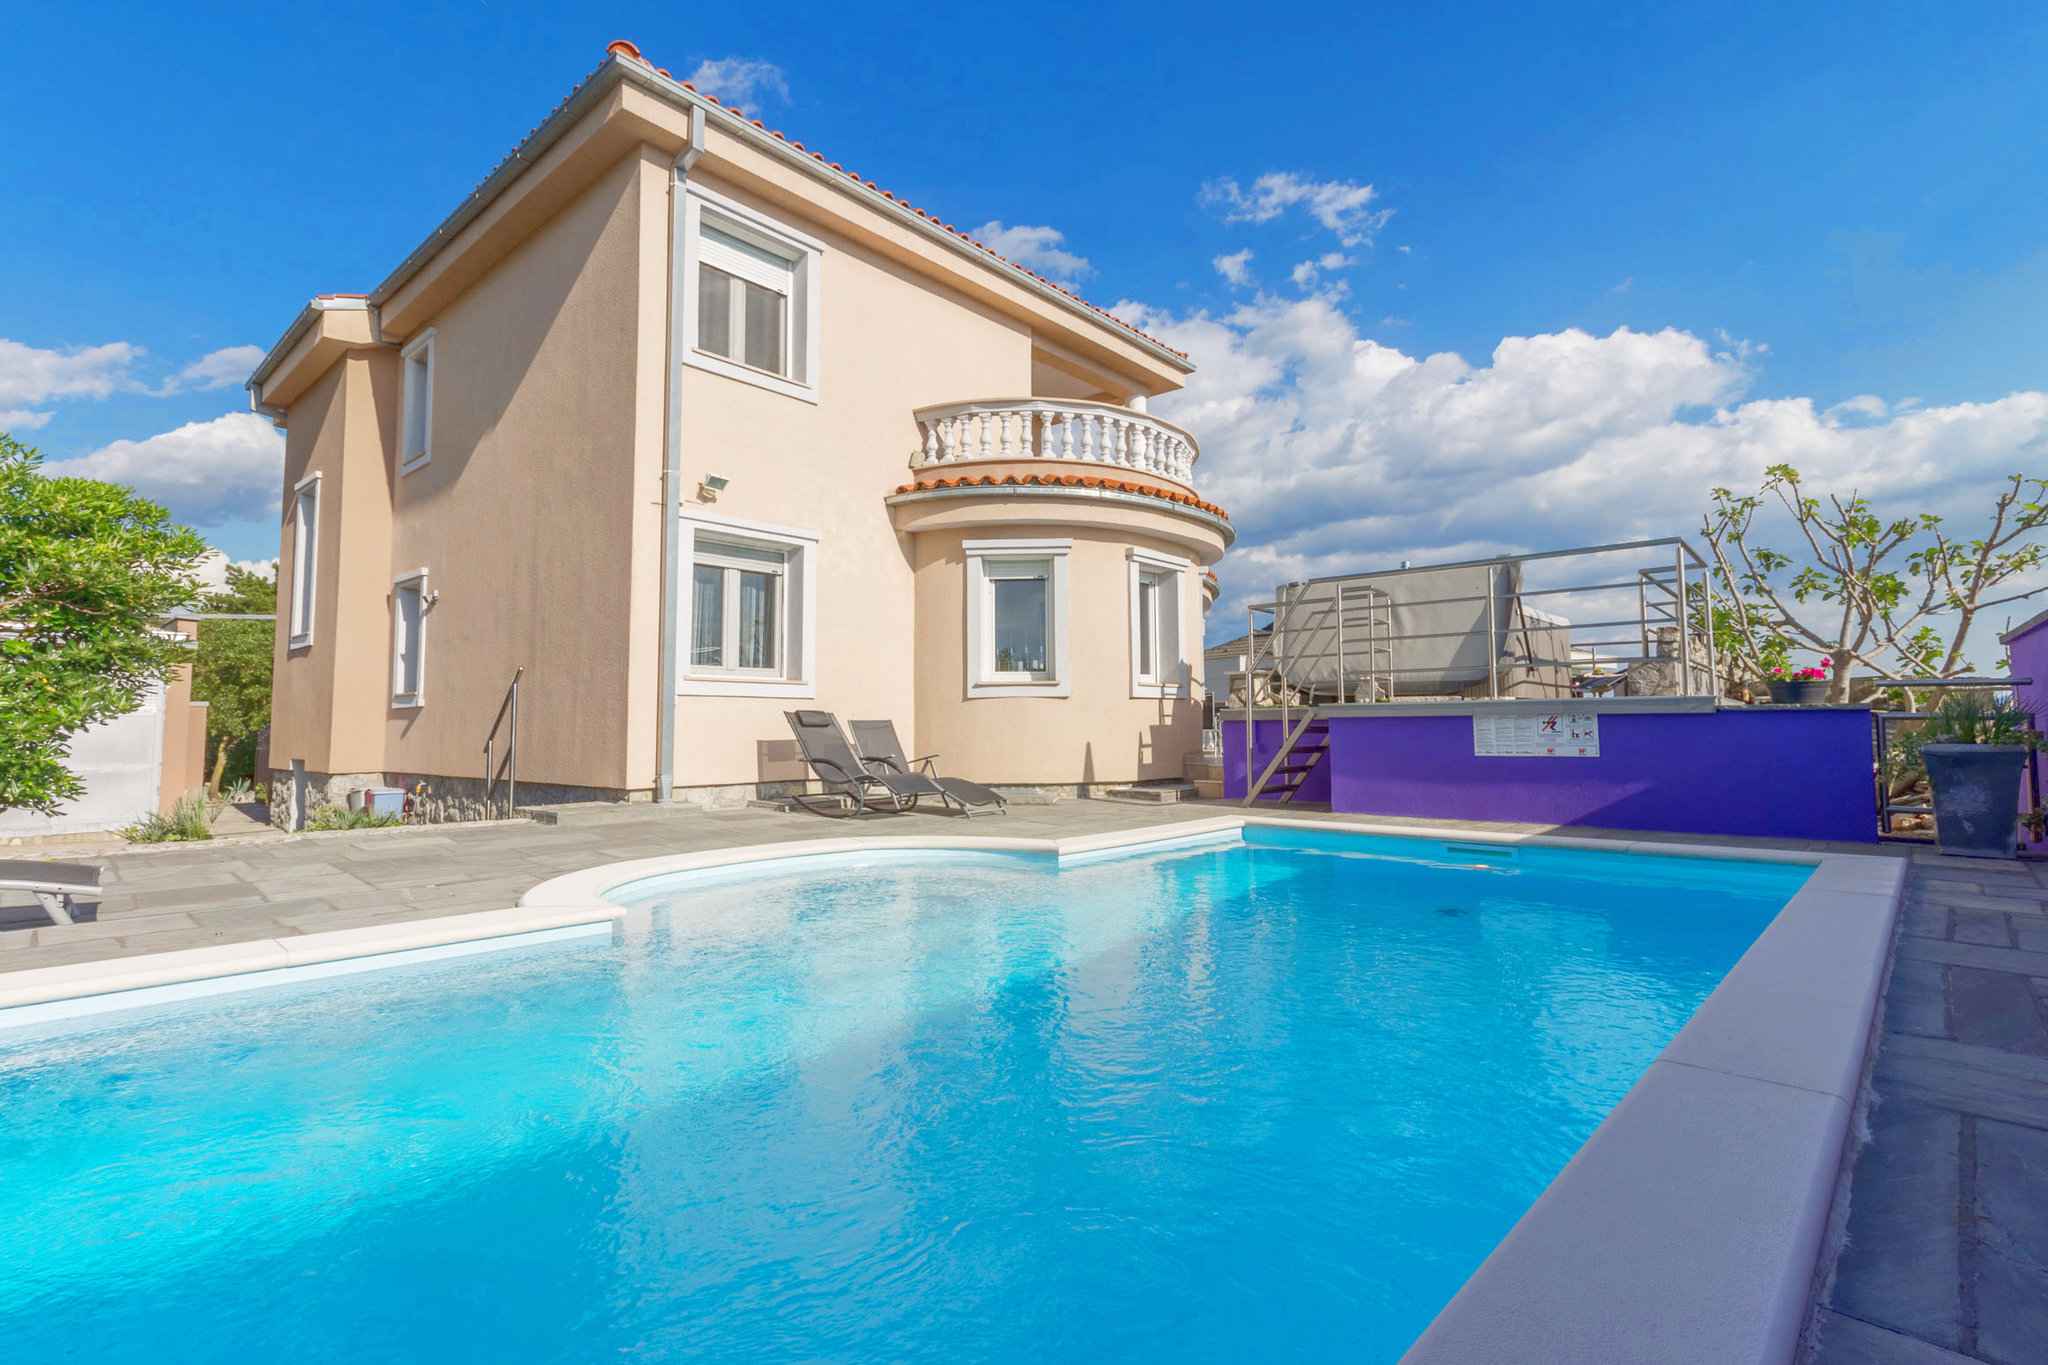 Villa mit Swimmingpool und Whirlpool Ferienhaus in Europa